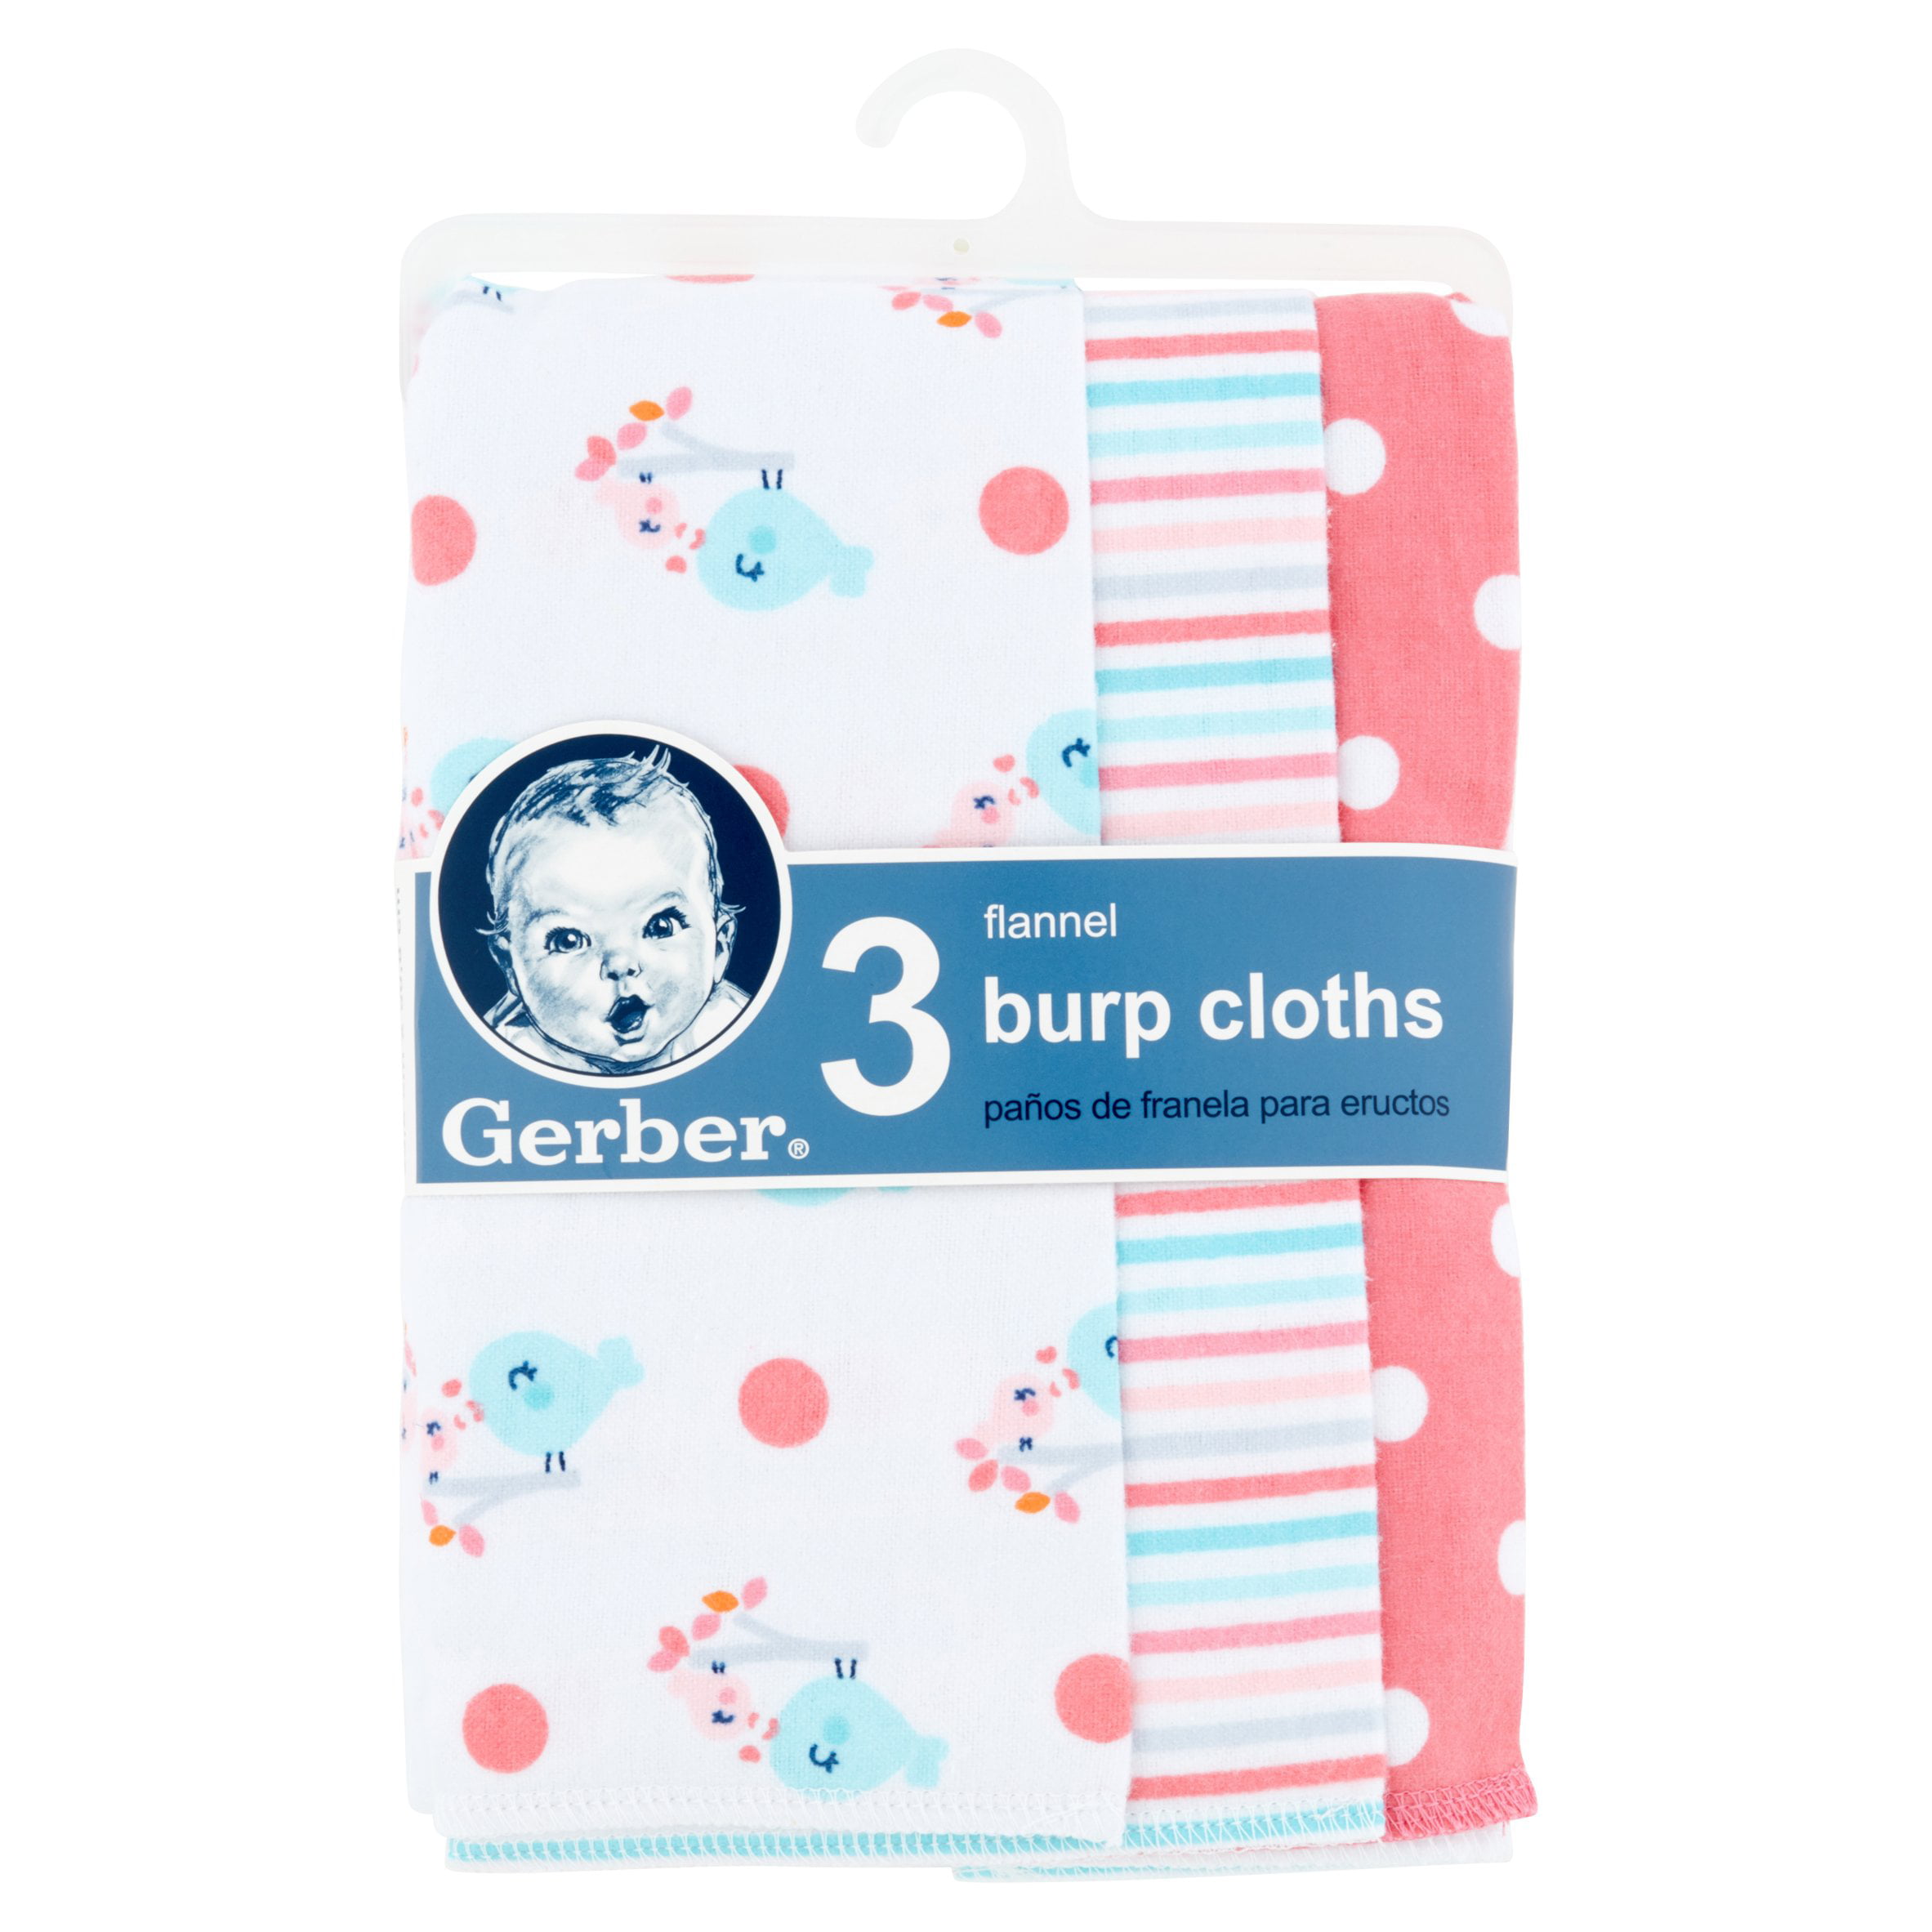 gerber baby burp cloths